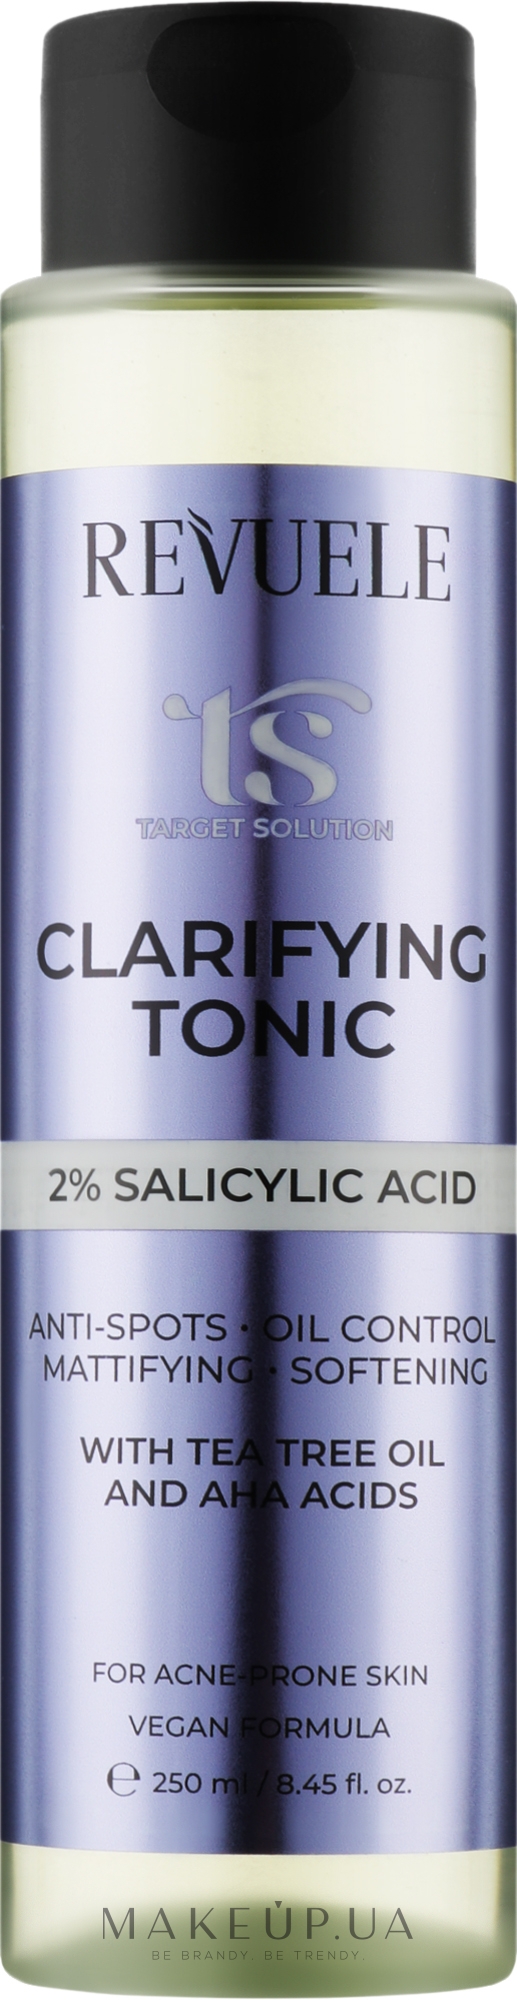 Очищающий тоник с салициловой кислотой 2% - Revuele Target Solution Clarifying Tonic — фото 250ml